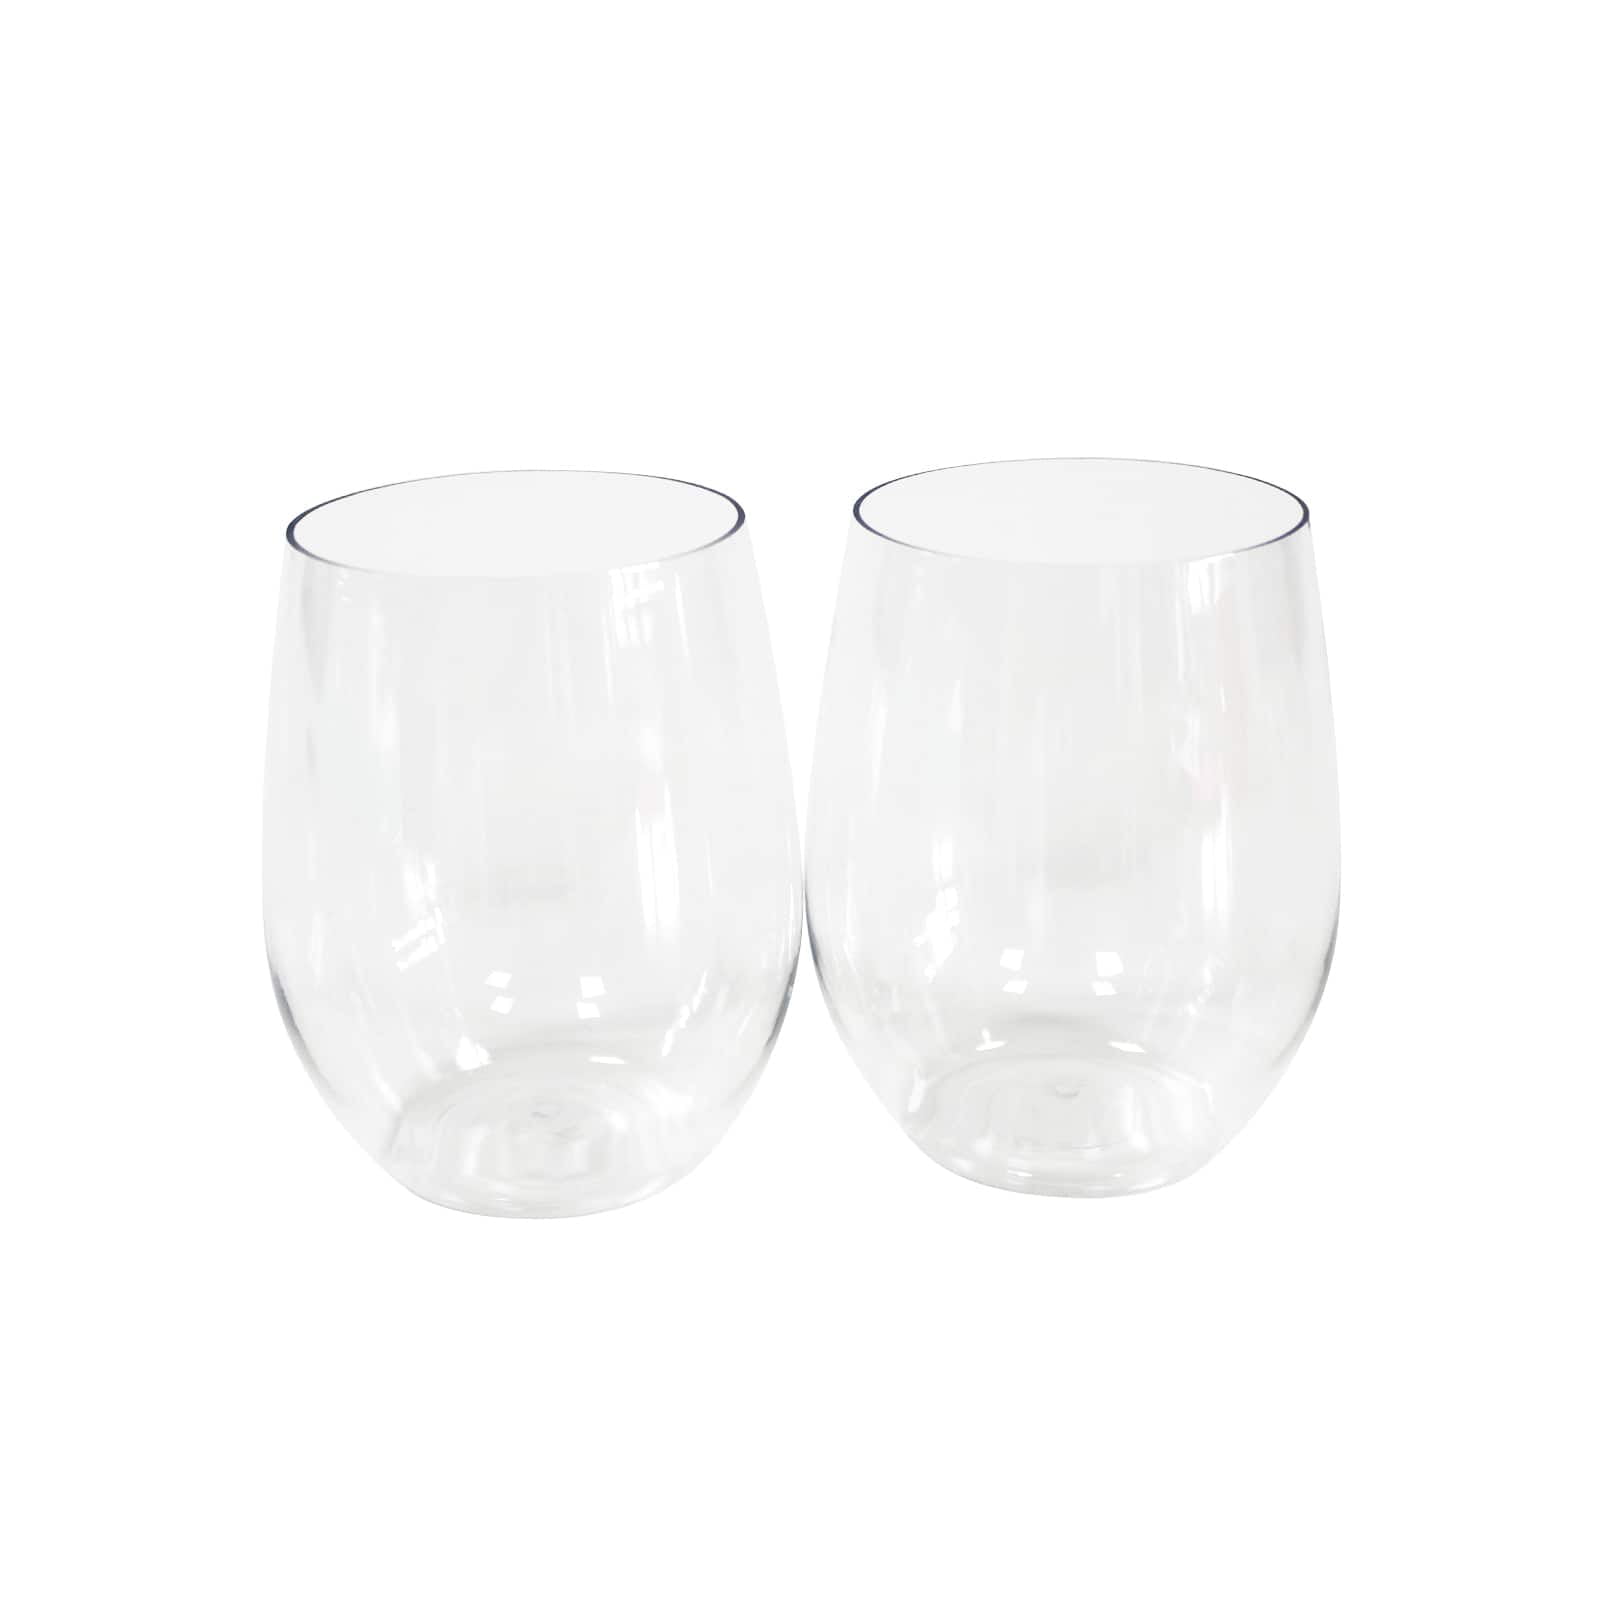 ColoVie 15 oz Stemless Wine Glasses Set of 6, Large Colored Wine Glasses,  Short Wine Glass Set for R…See more ColoVie 15 oz Stemless Wine Glasses Set